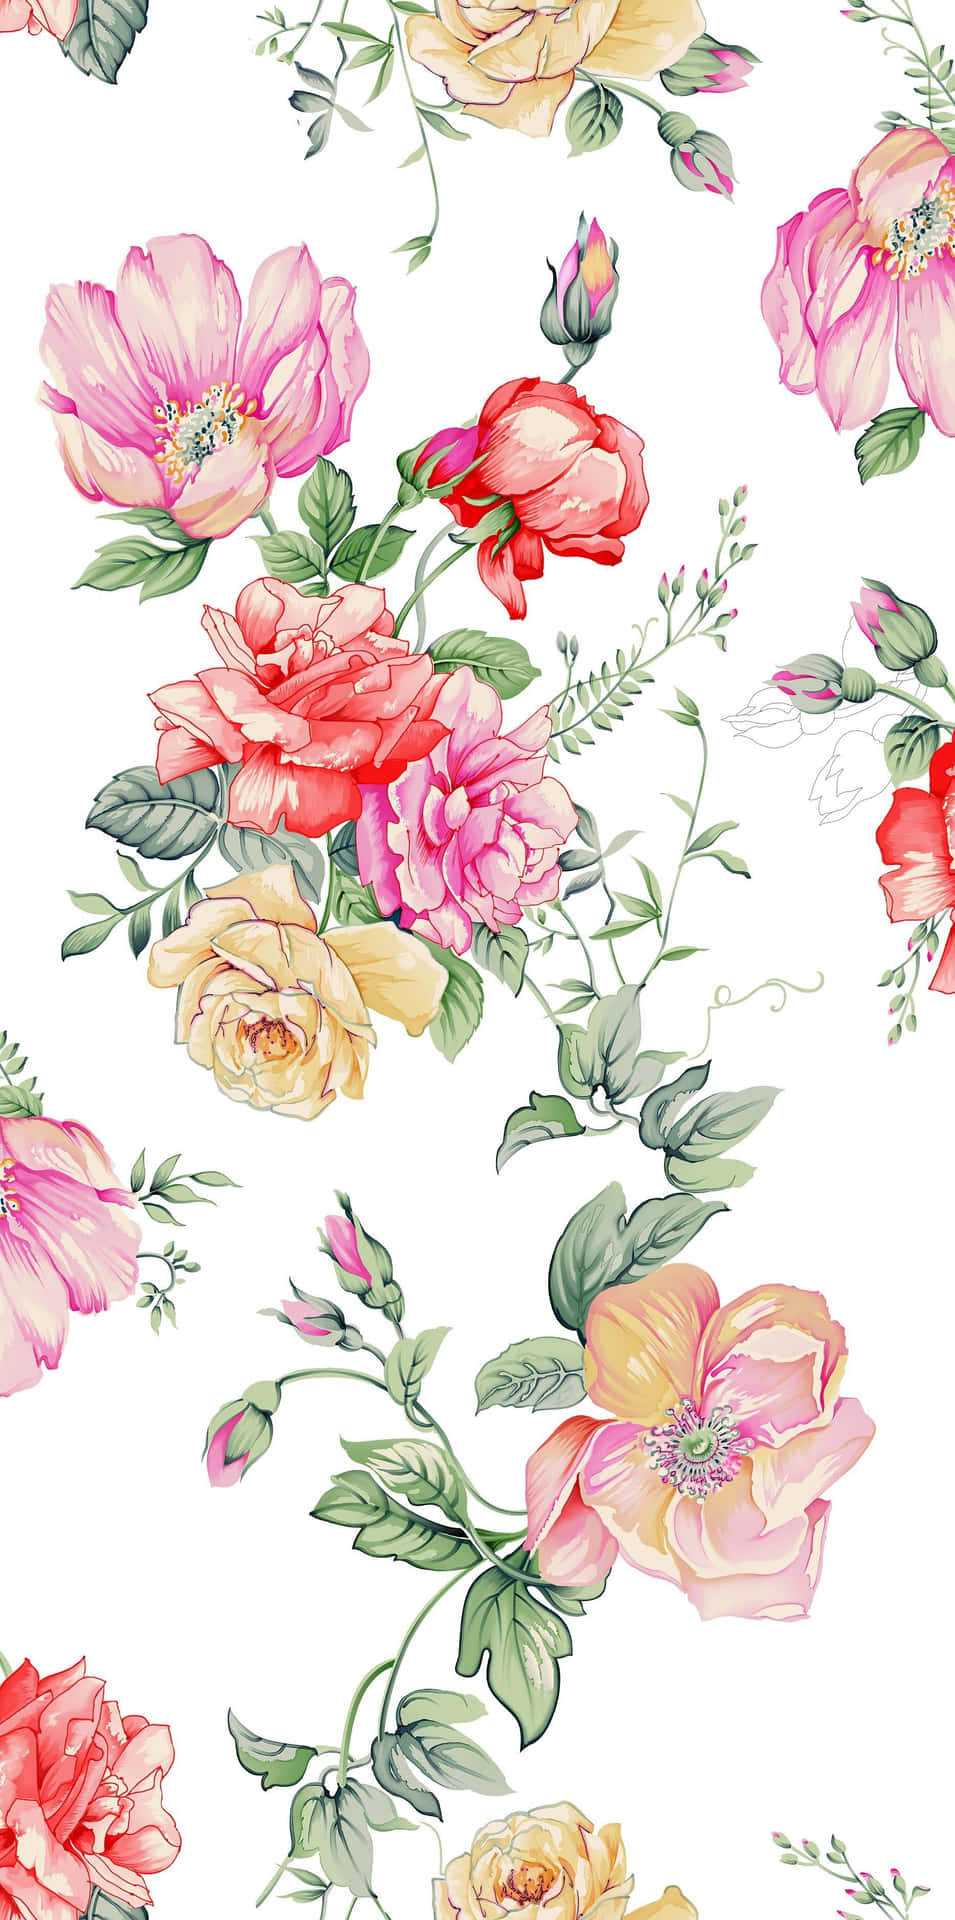 Captivating Vibrance in Floral Art Wallpaper